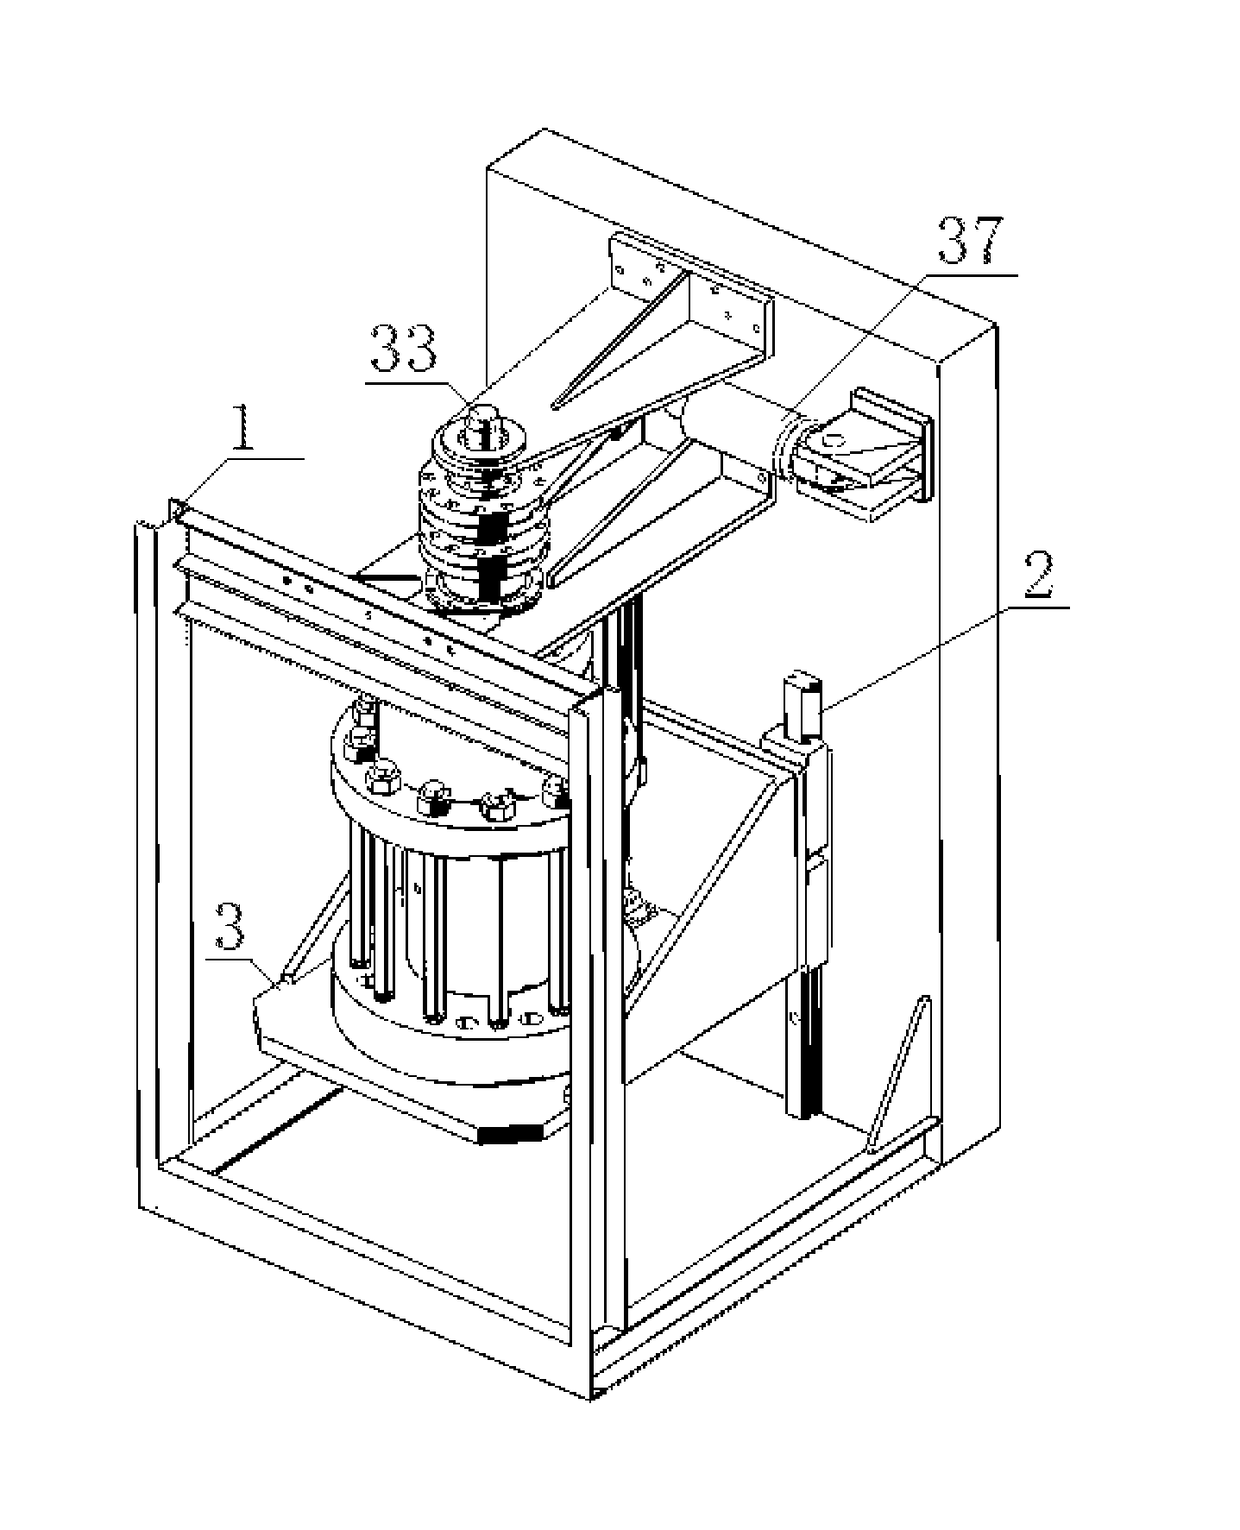 Rock hollow cylinder torsional shear apparatus